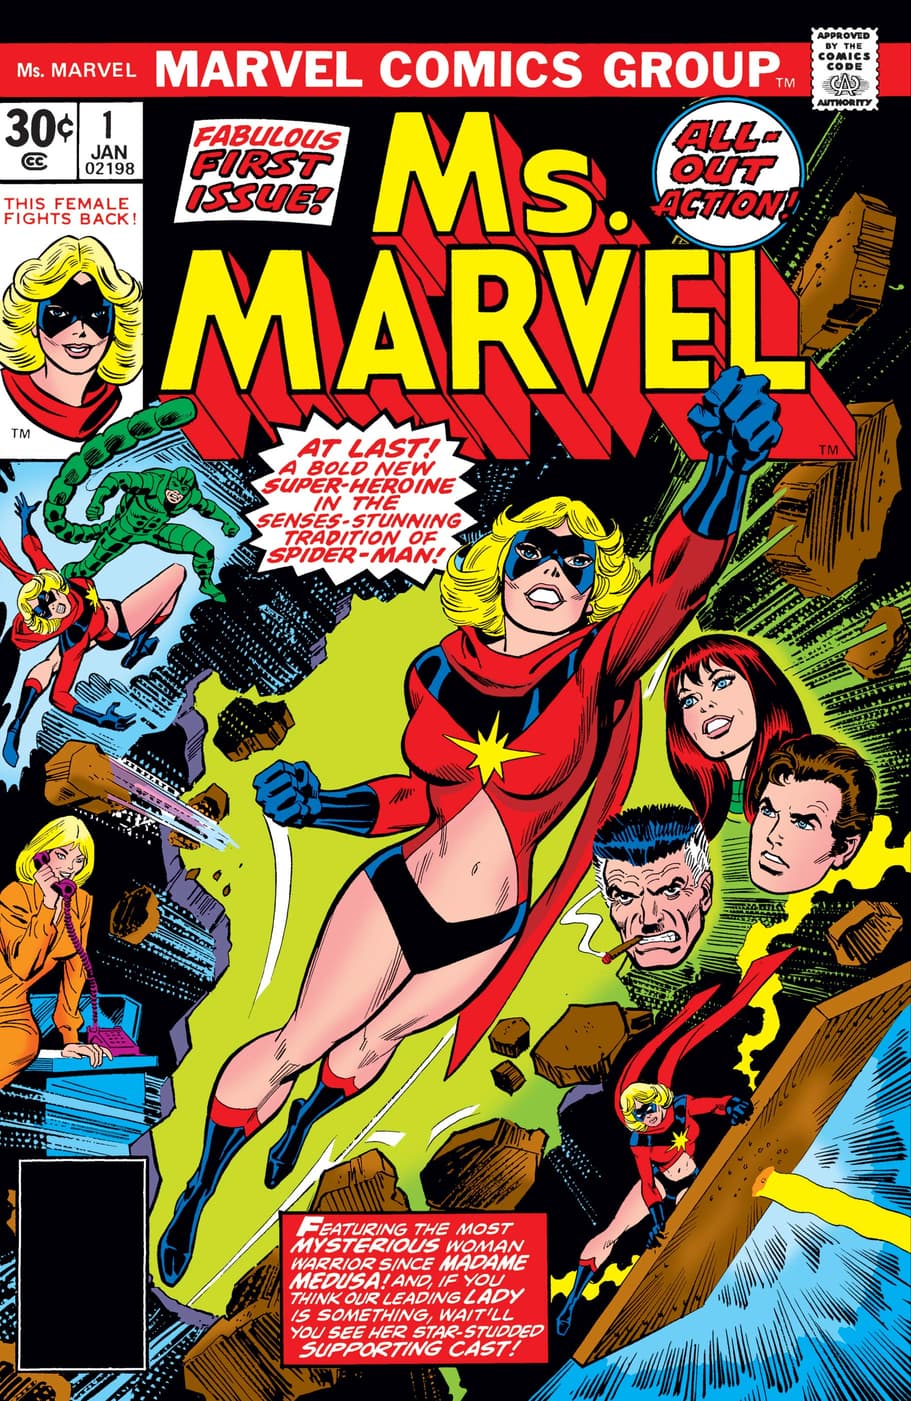 Comic Book MS MARVEL 3 / / 6.0 FINE 1977 